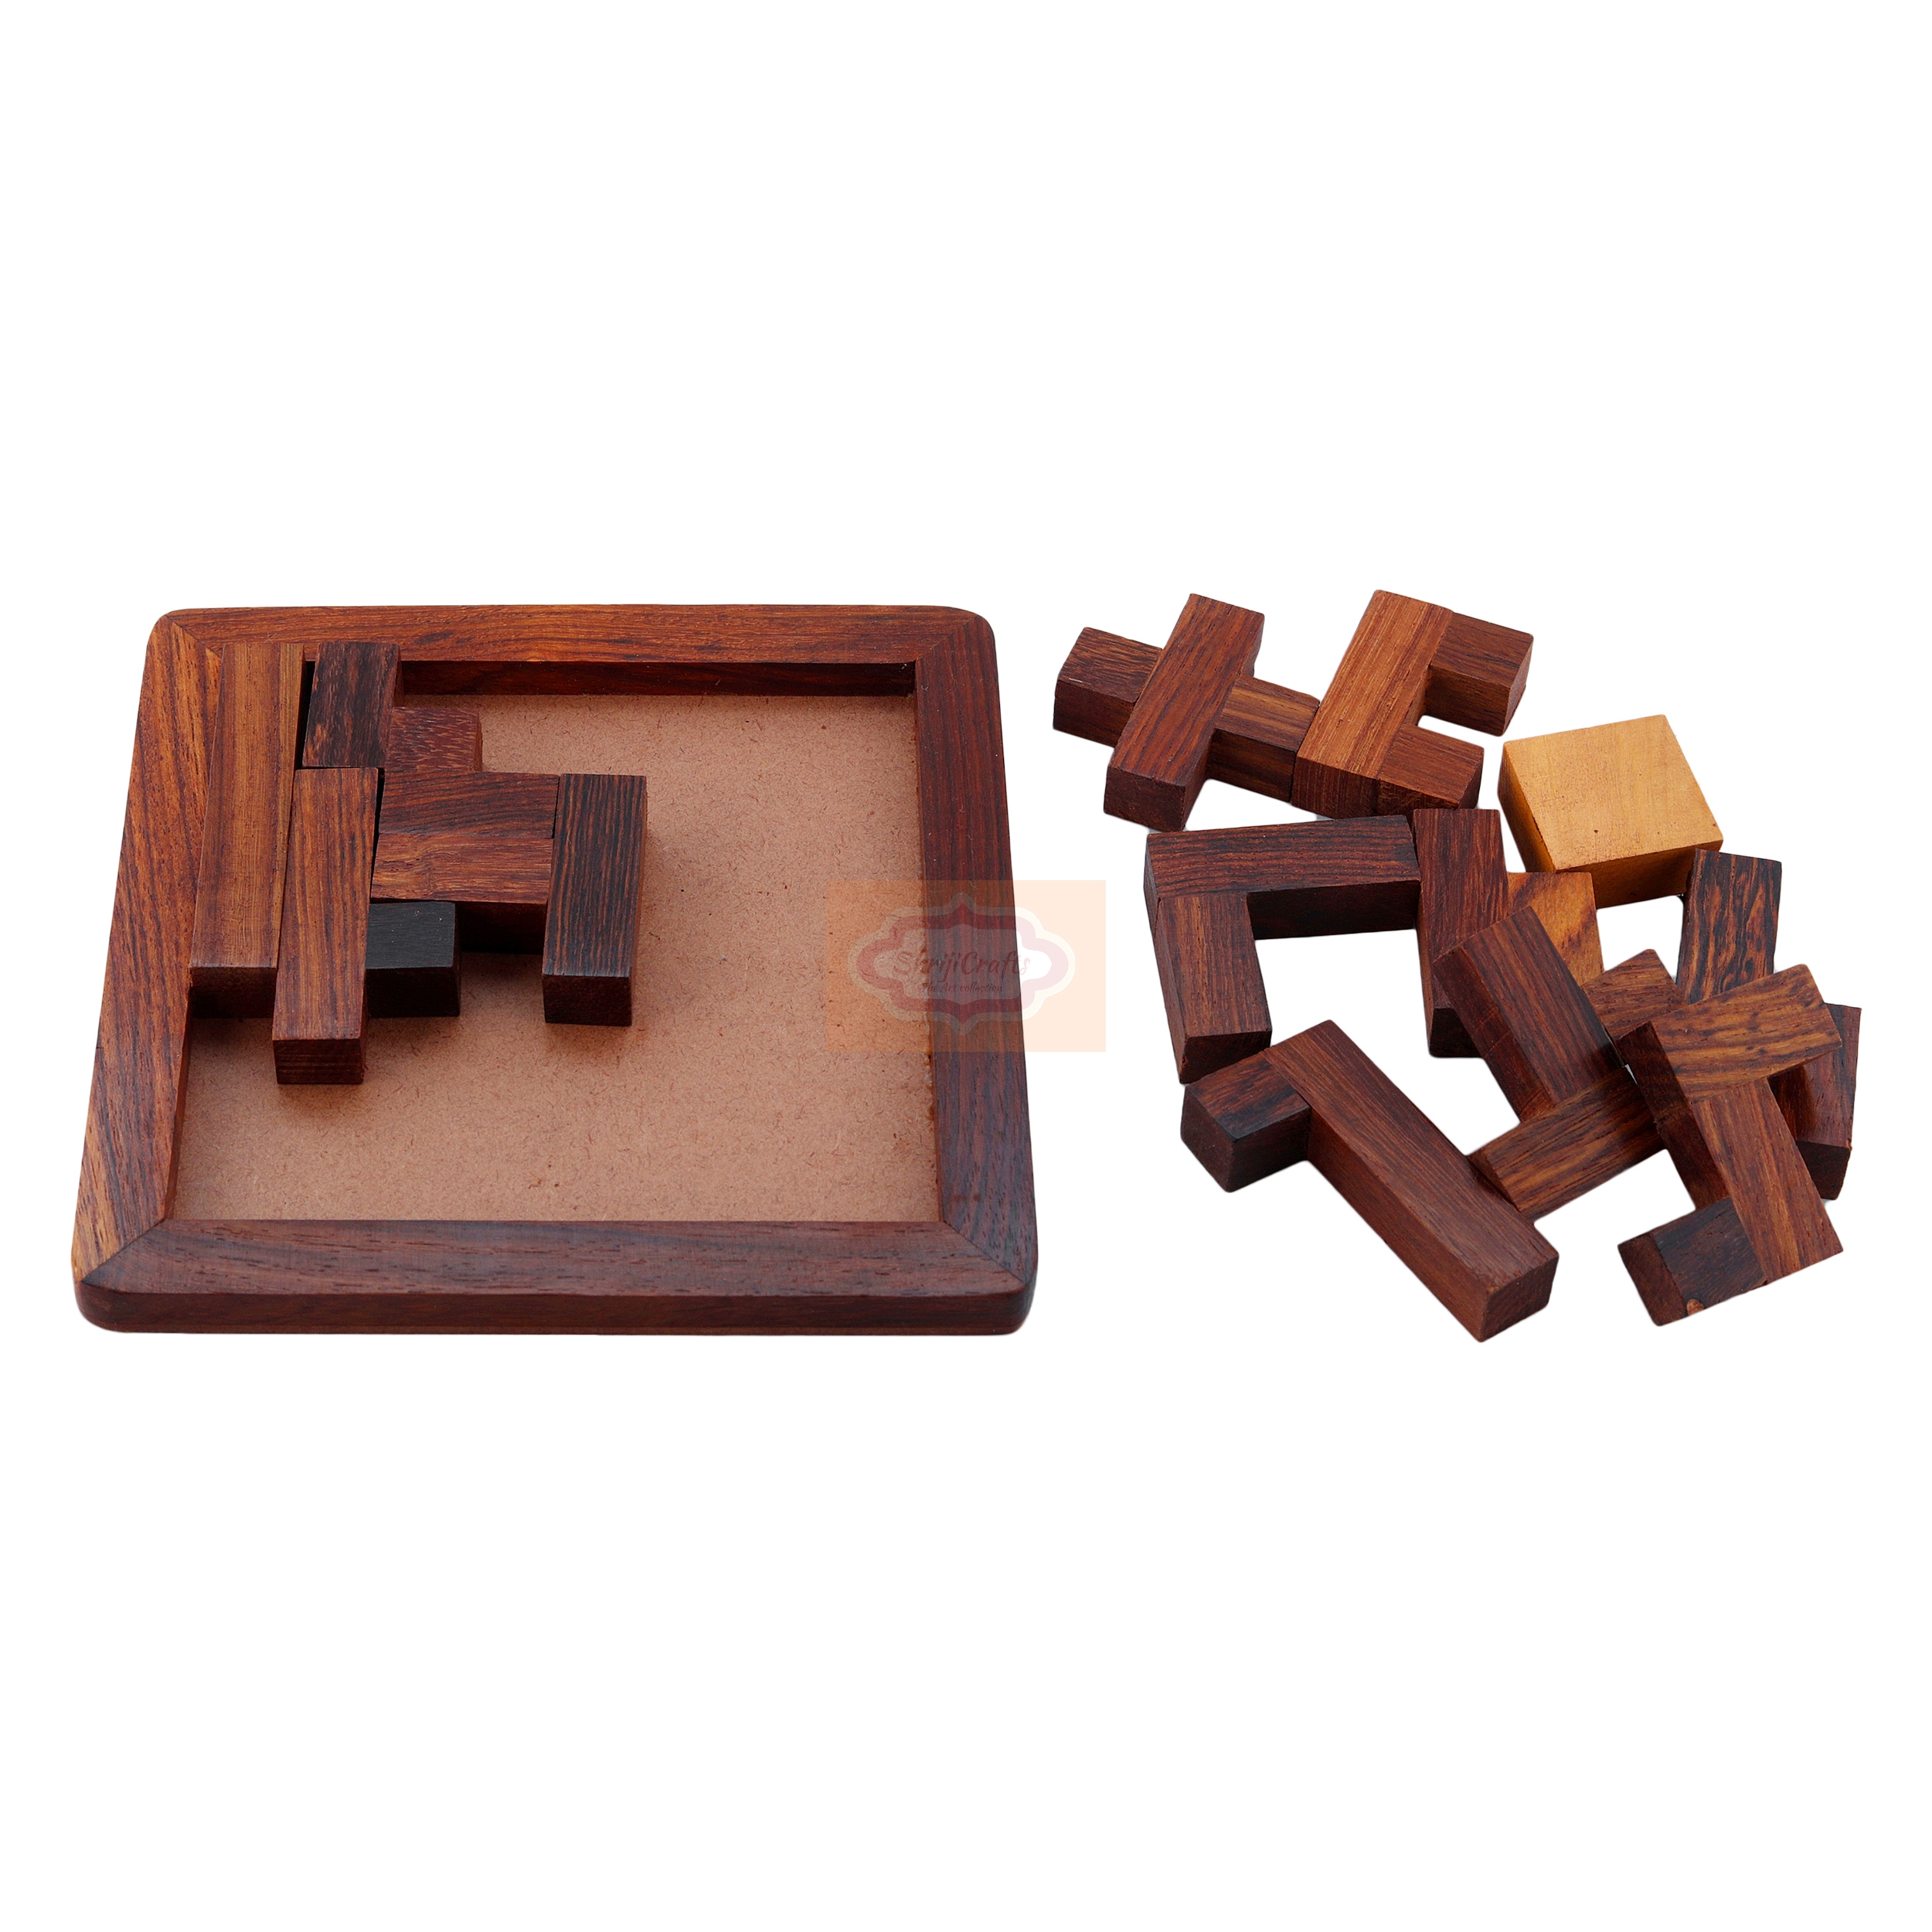 Shrijicrafts | ShrijiCrafts Handmade Indian Wood Jigsaw Puzzle Wooden Toys for Kids